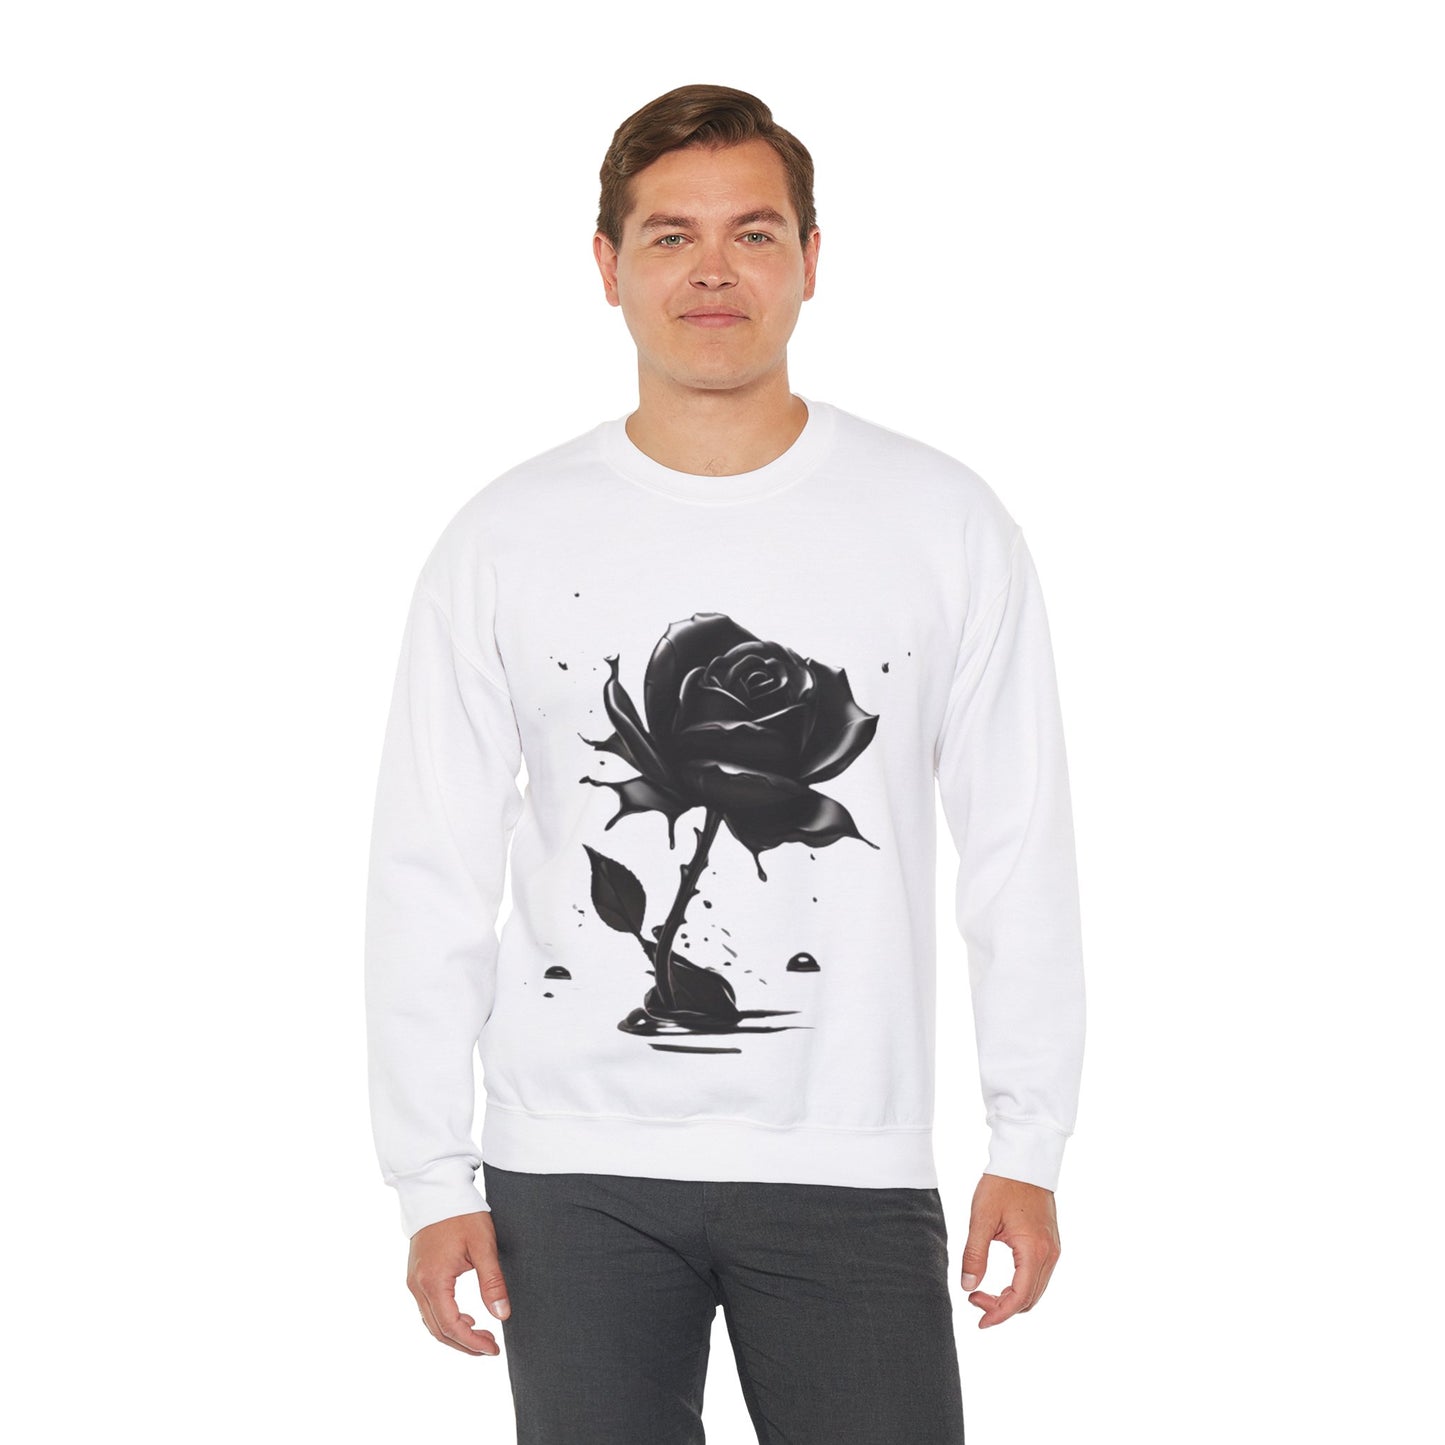 Black Rose - Unisex Crewneck Sweatshirt